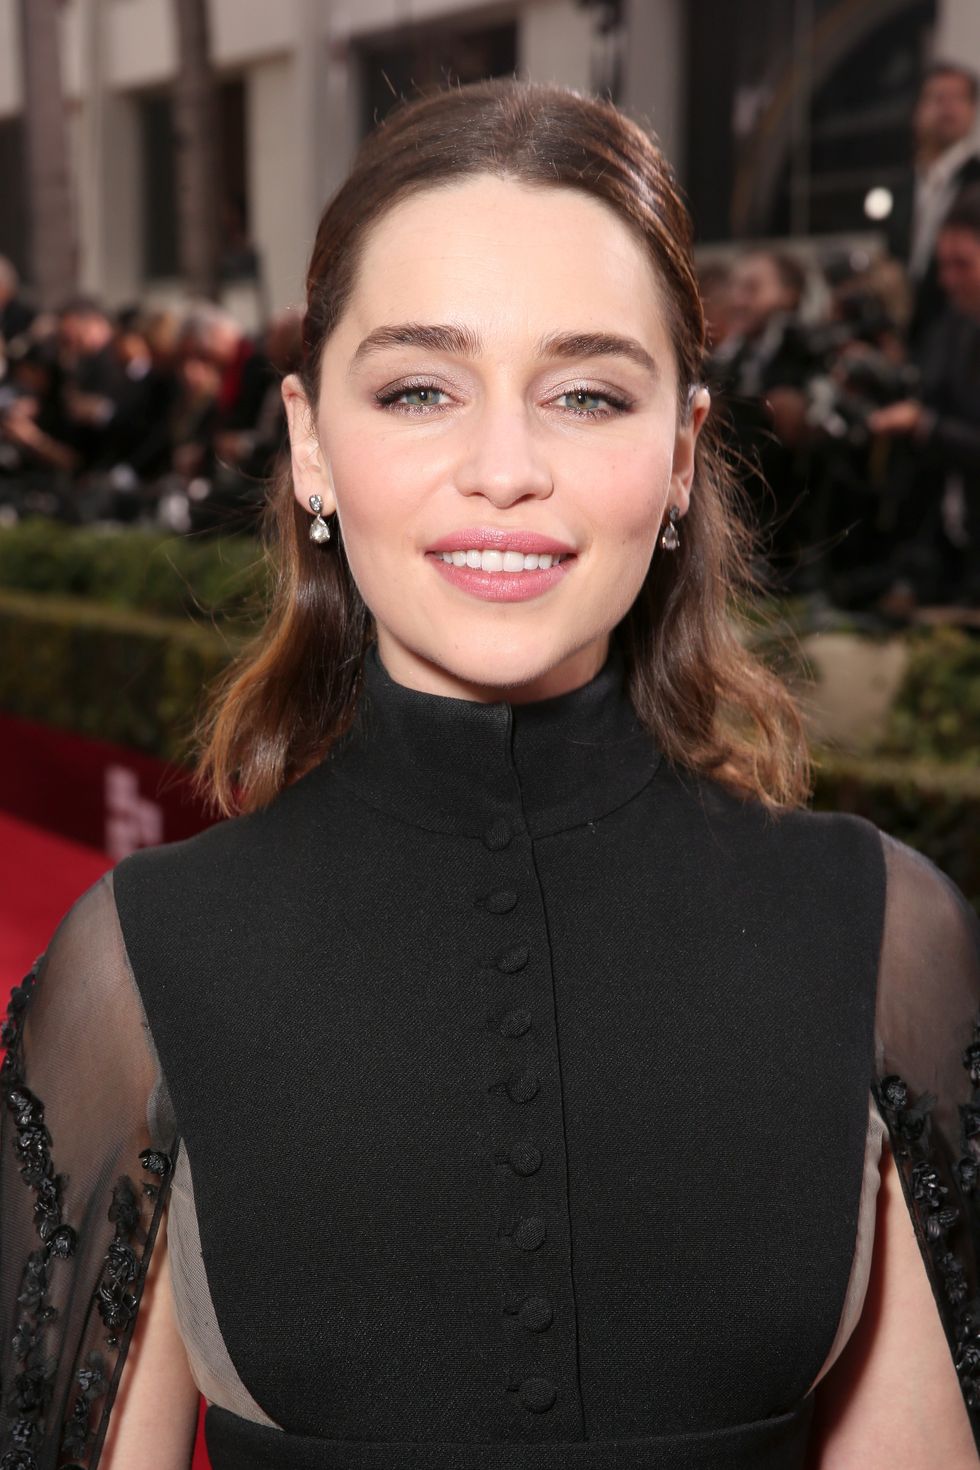 Emilia Clarke  - Golden Globes 2016 hair and makeup trends